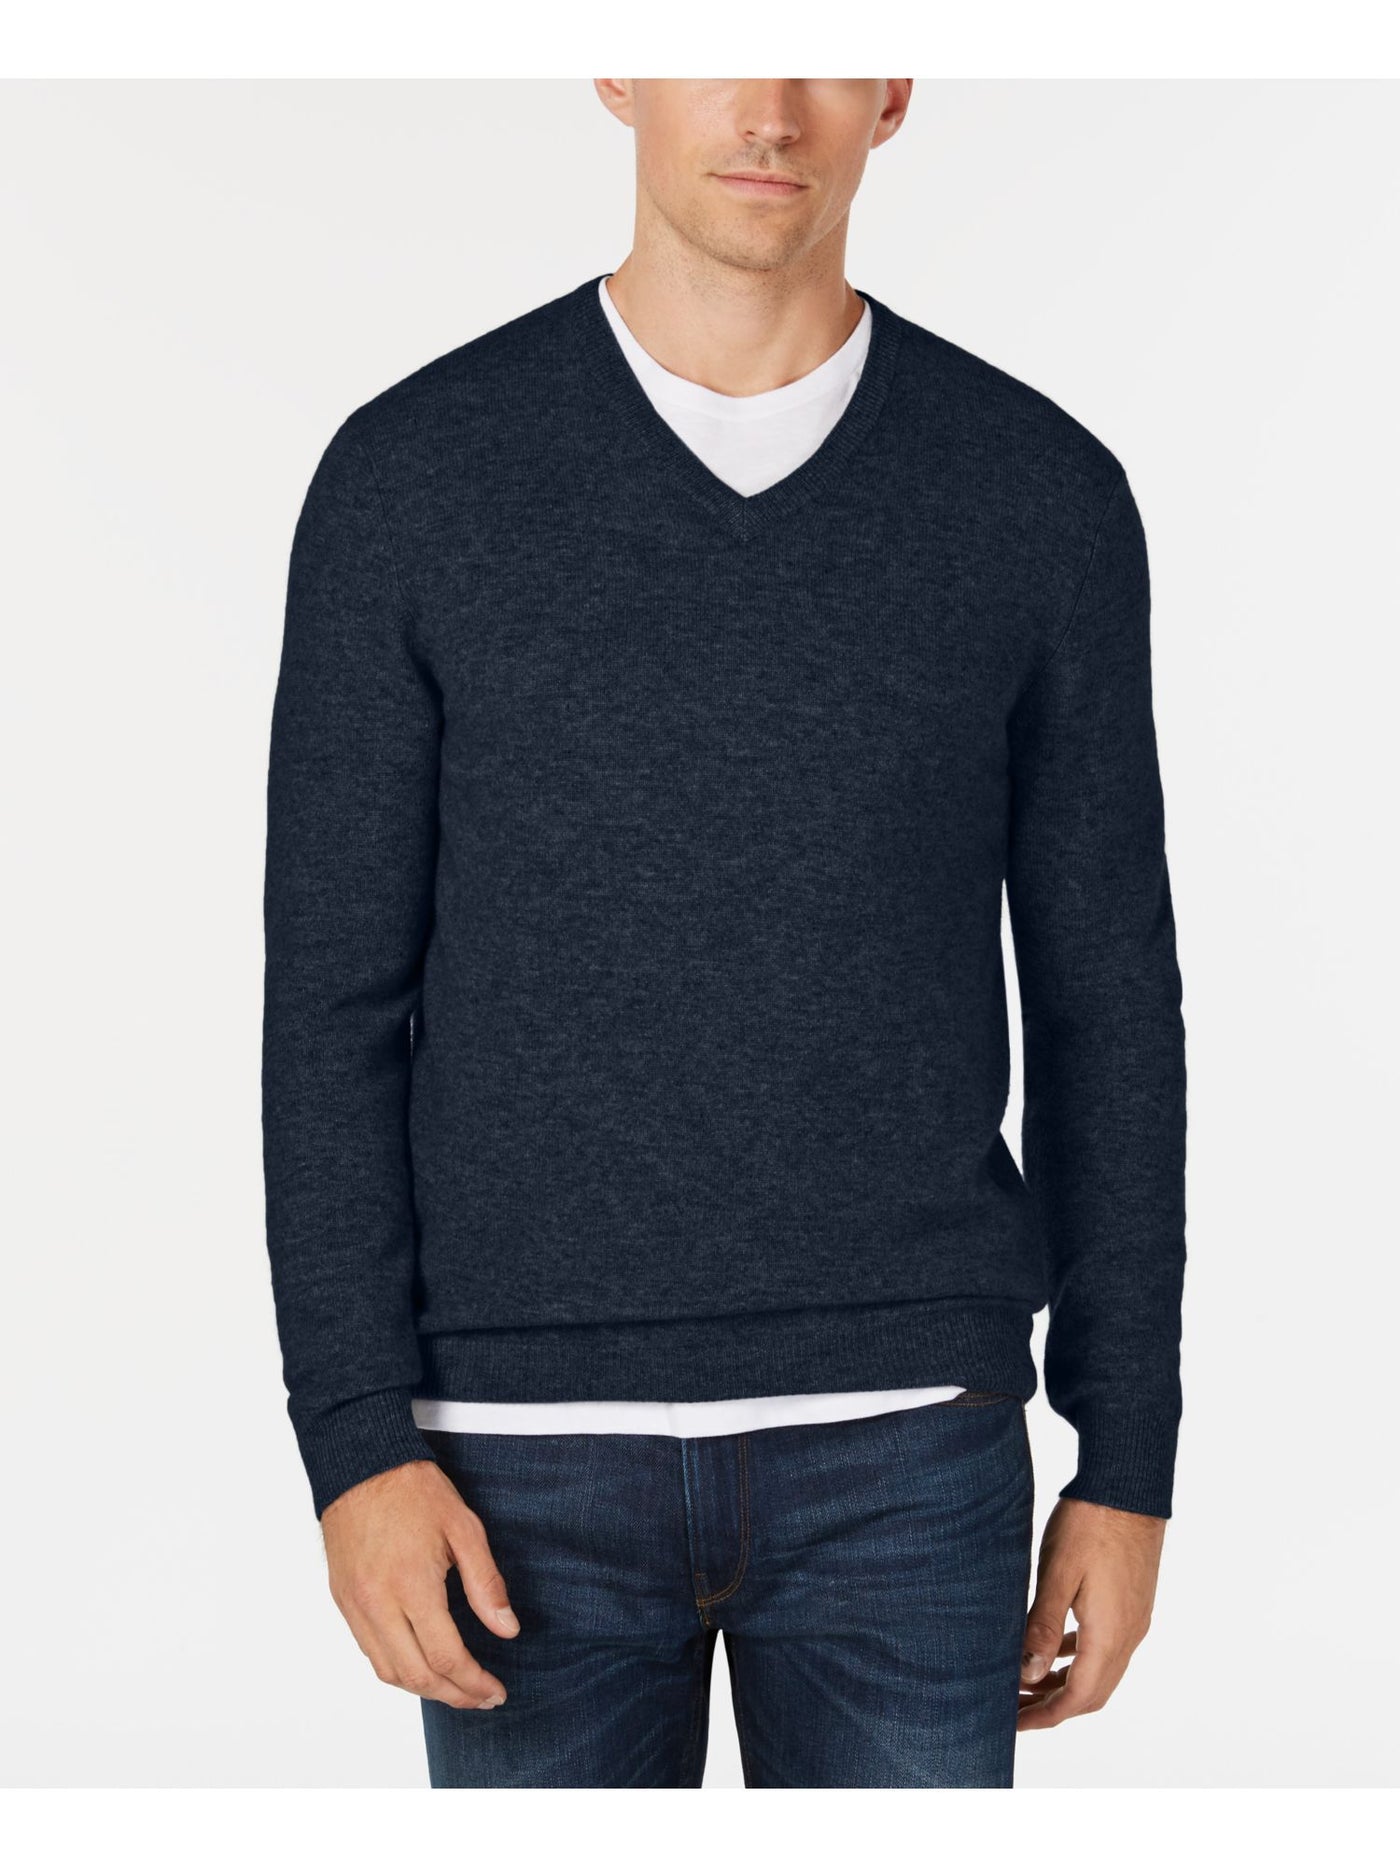 CLUBROOM Mens Navy V Neck Merino Blend Pullover Sweater S